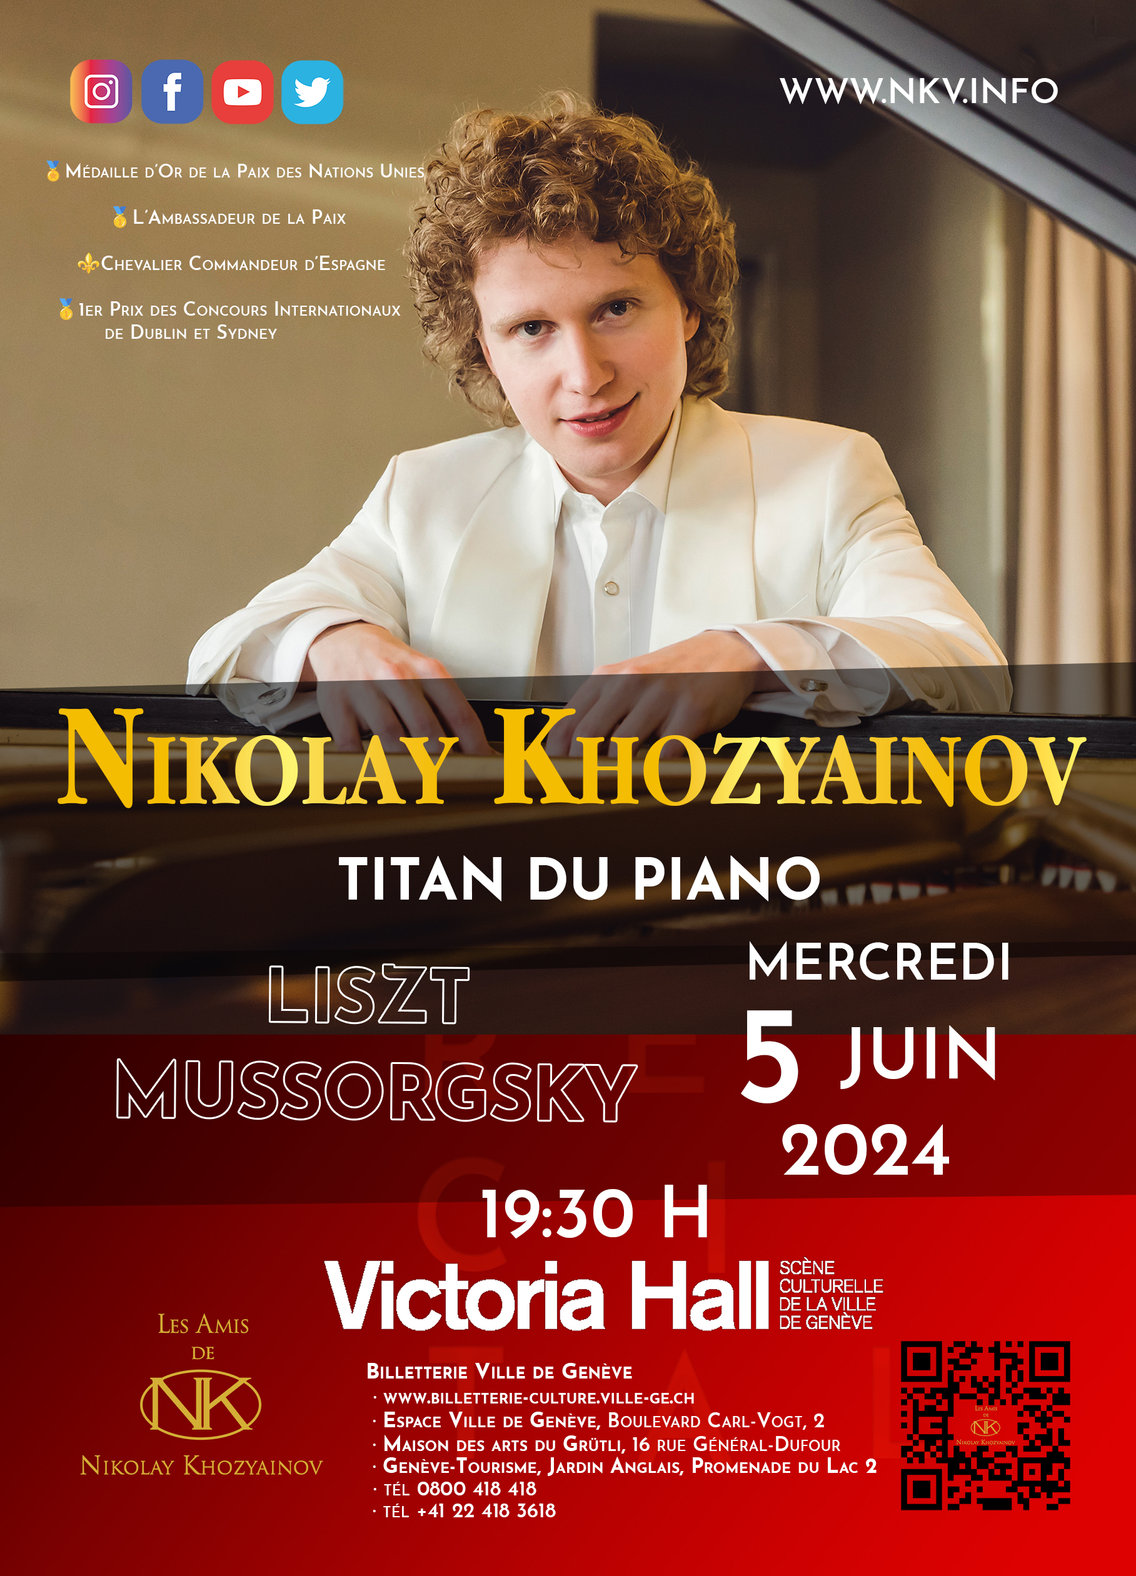 Programme d’œuvres de Scriabine, Liszt, Moussorgski et <i>Fantaisie</i> par Nikolay Khozyainov.